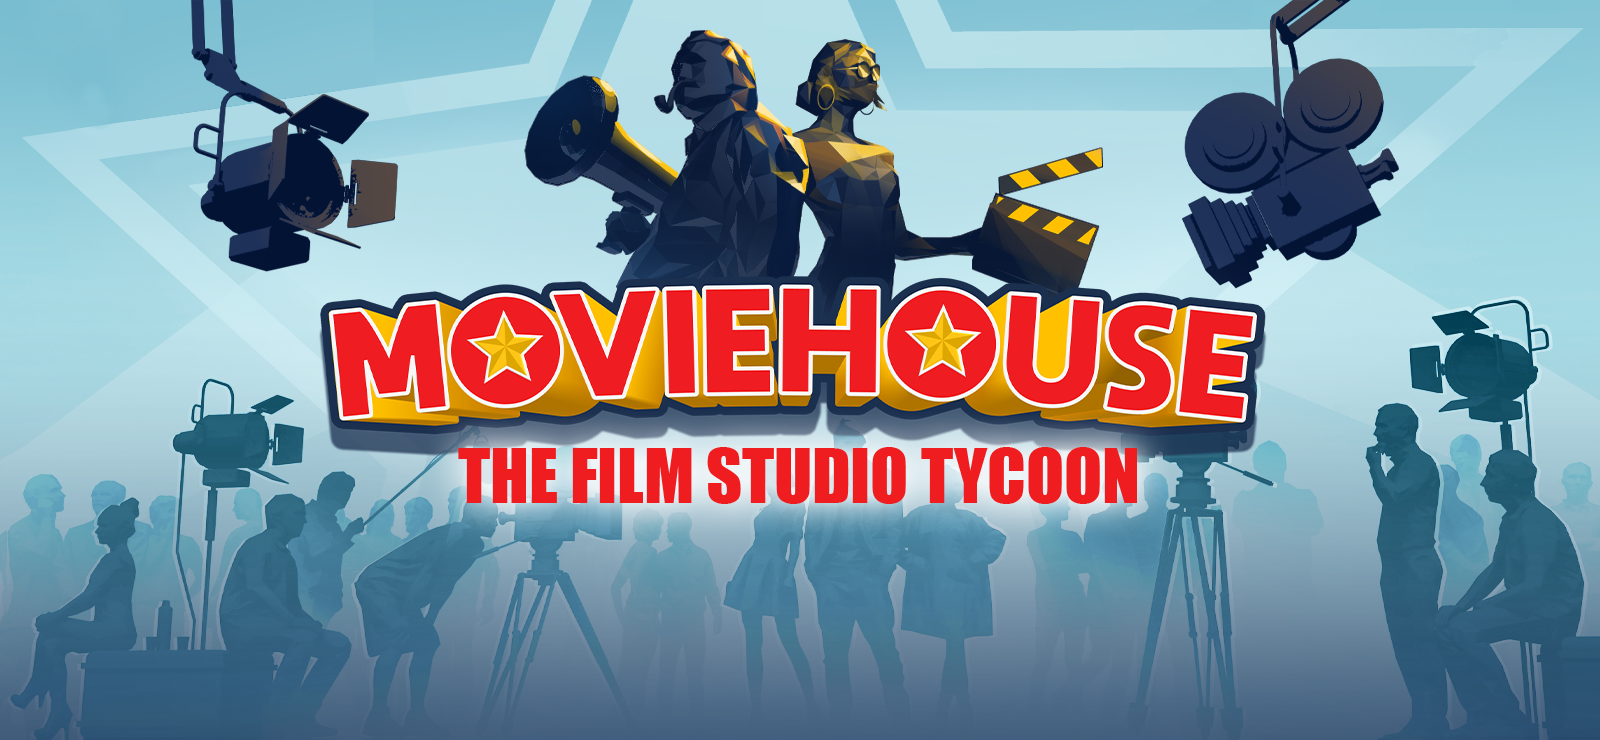 Moviehouse - The Film Studio Tycoon